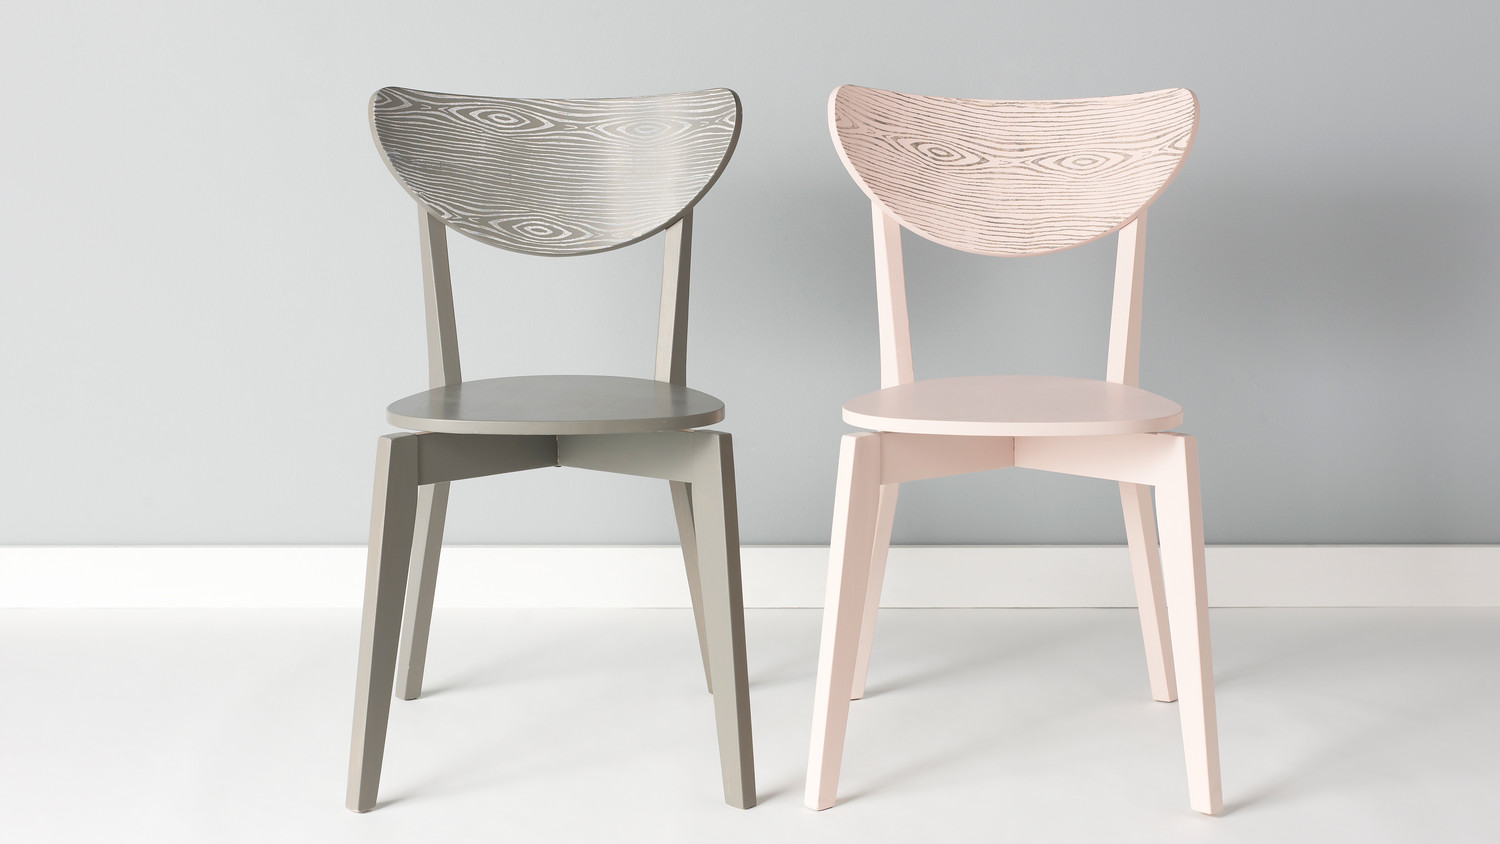 Cool Desk Chairs /"Ursa/" Petite Standing Desk Stool